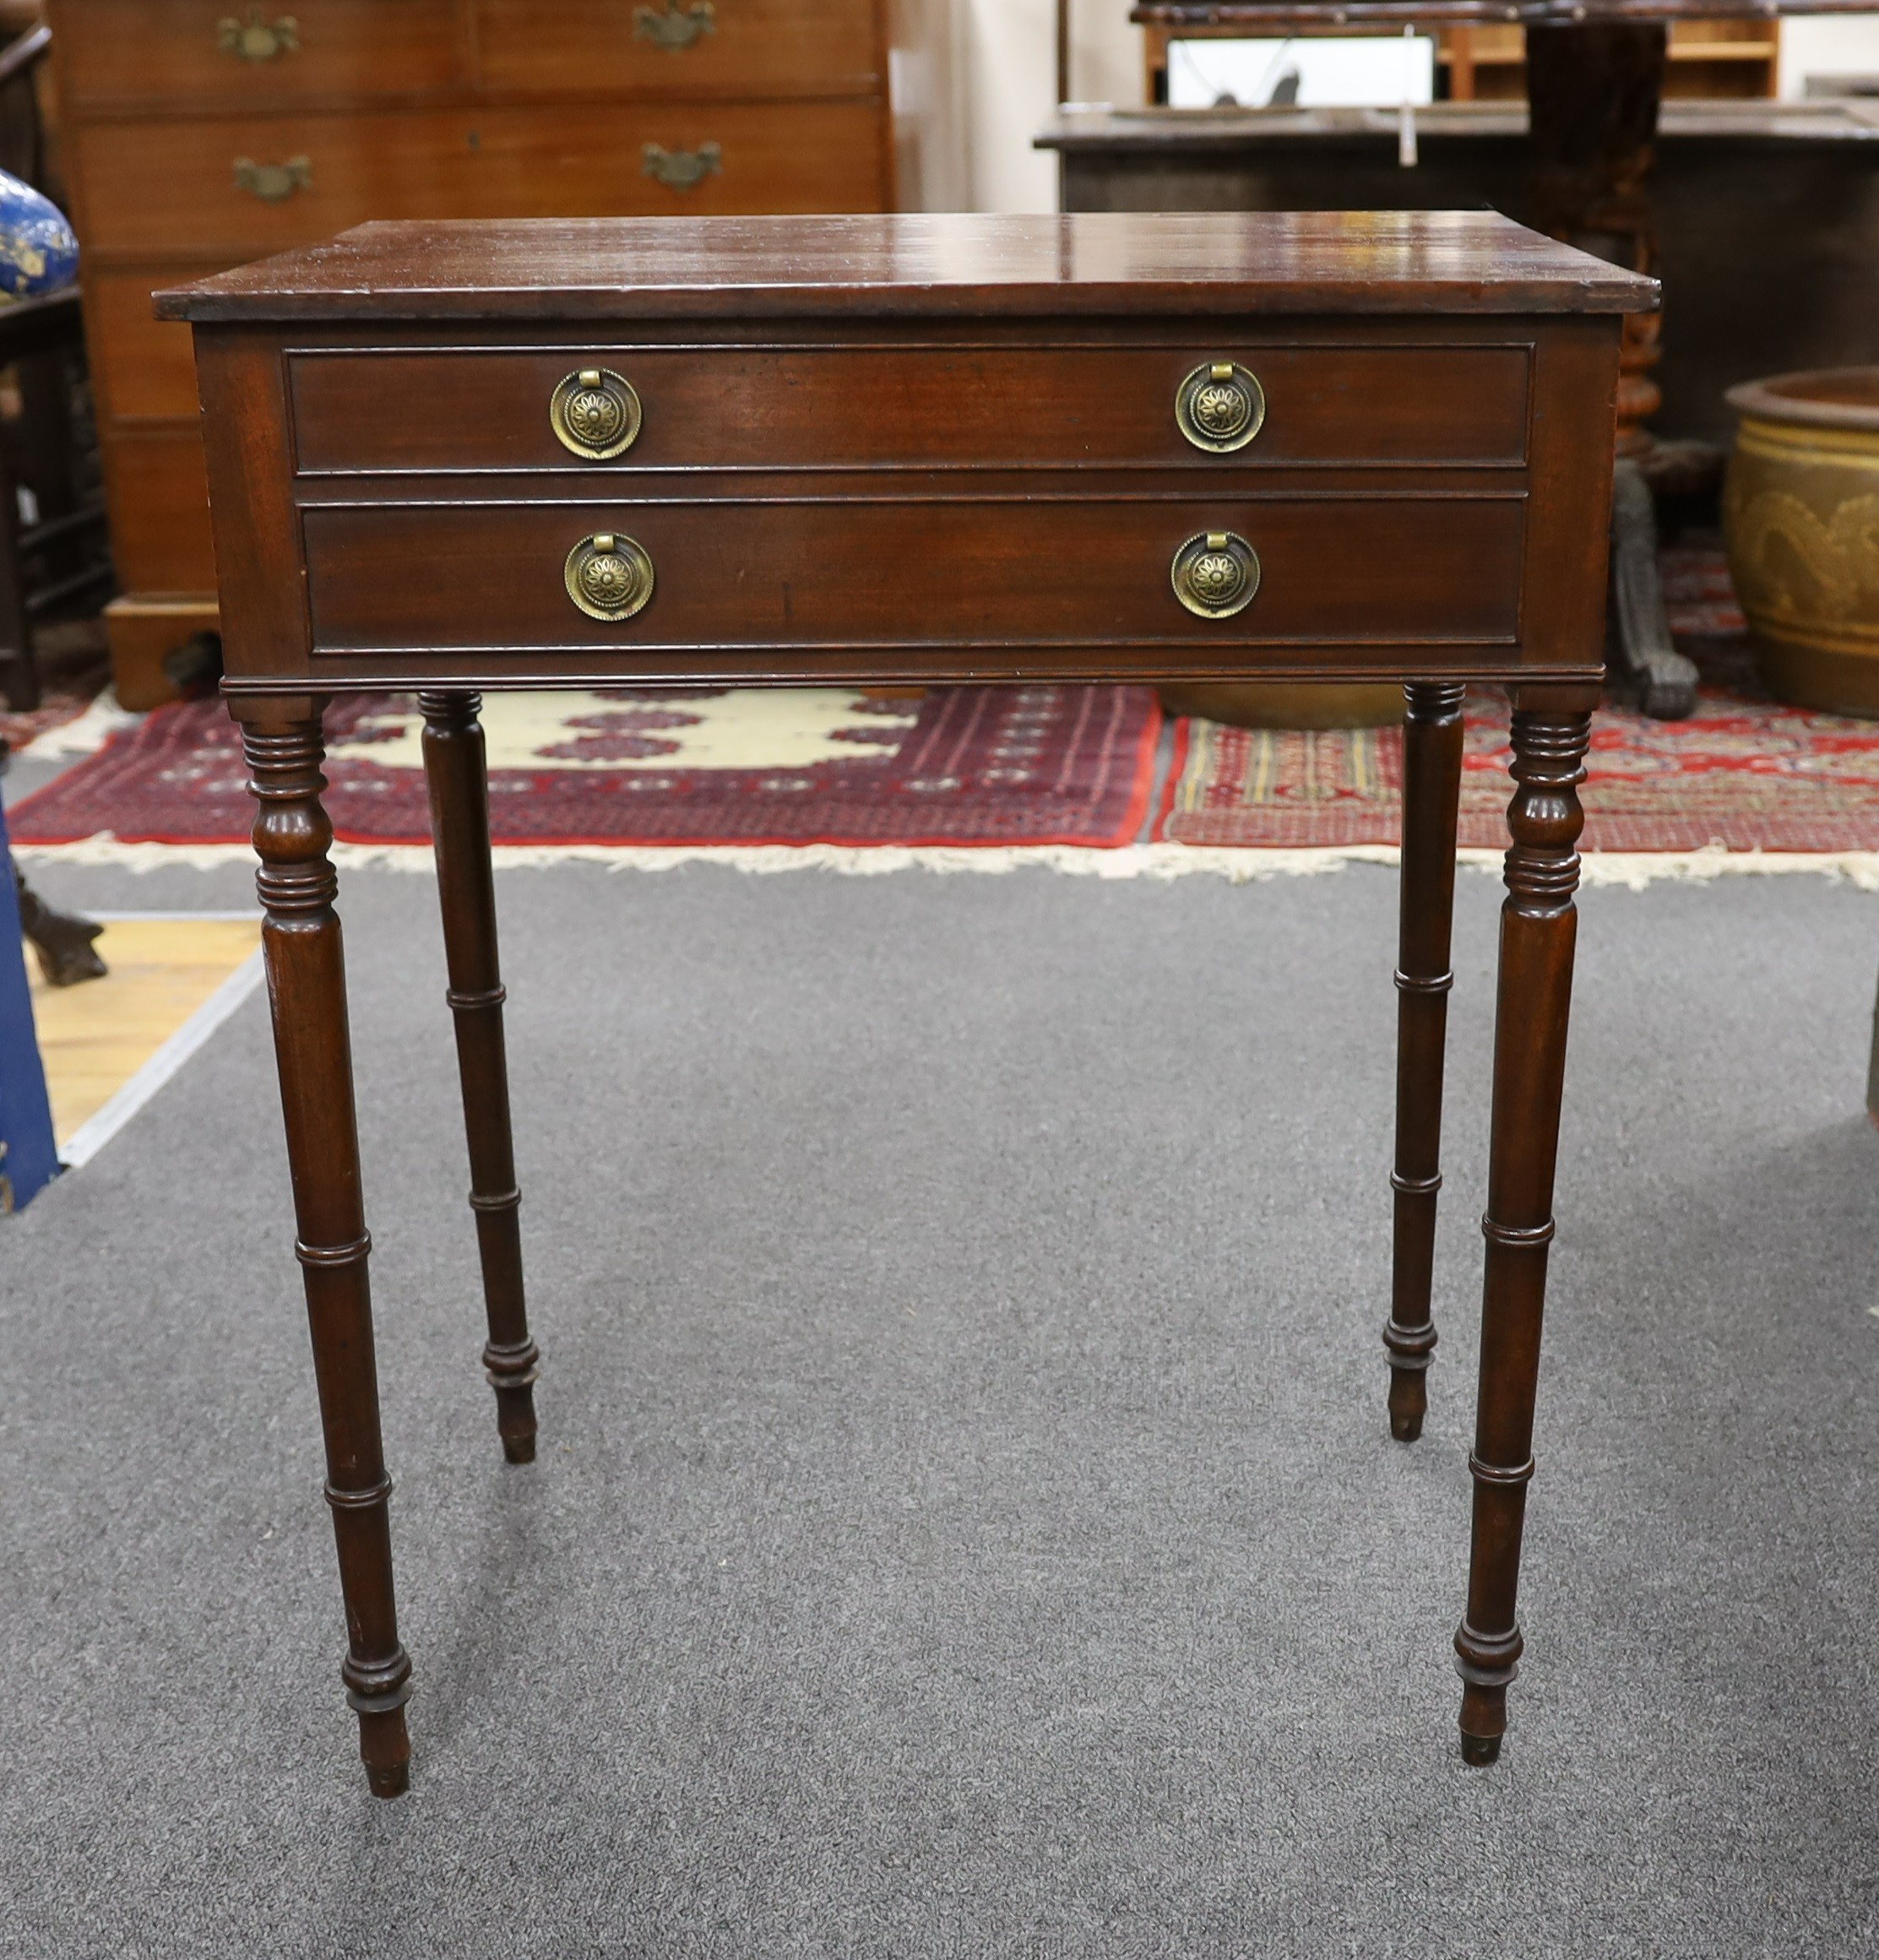 A Regency rectangular mahogany four drawer side table, width 60cm, depth 40cm, height 72cm - Image 3 of 3